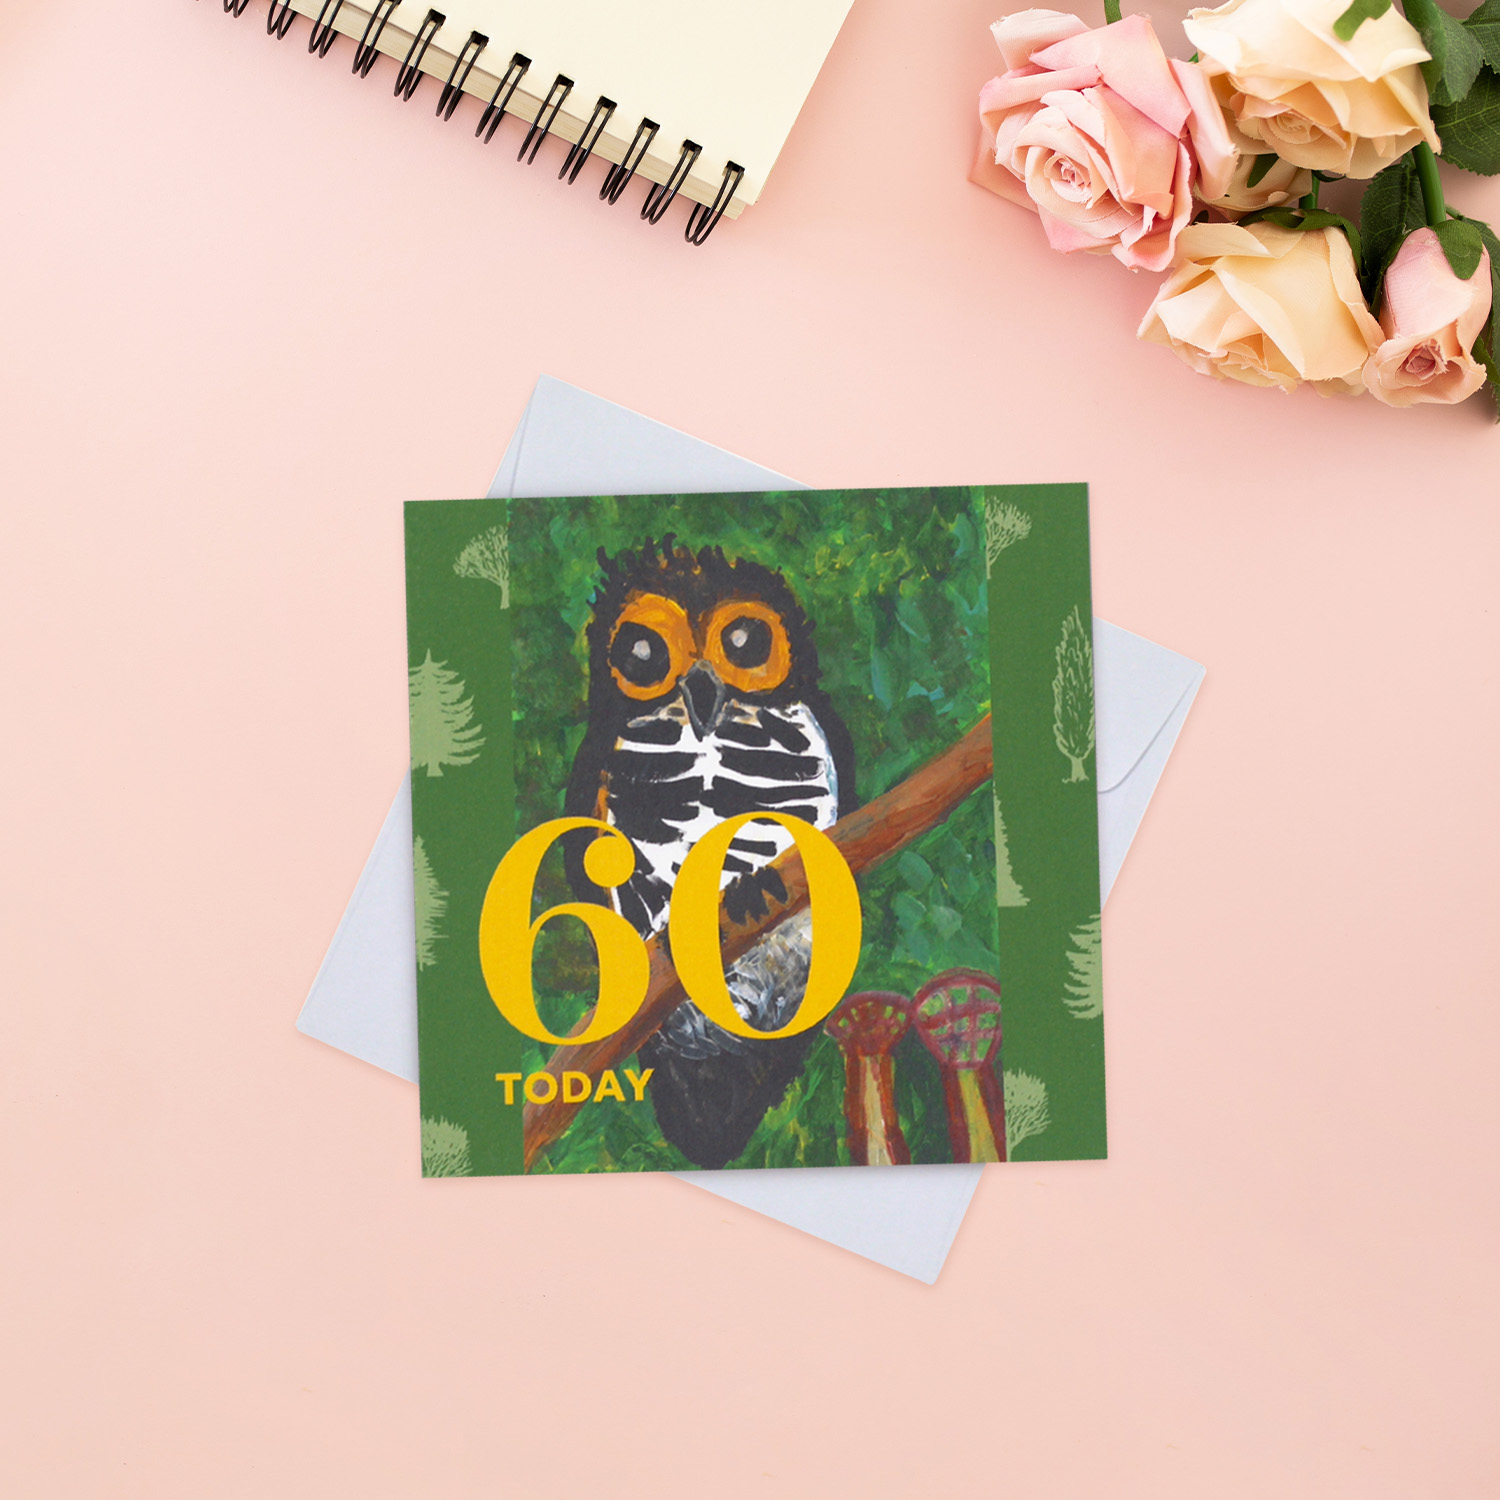 CARD - 60 TODAY (SINGAPORE BIRDS)